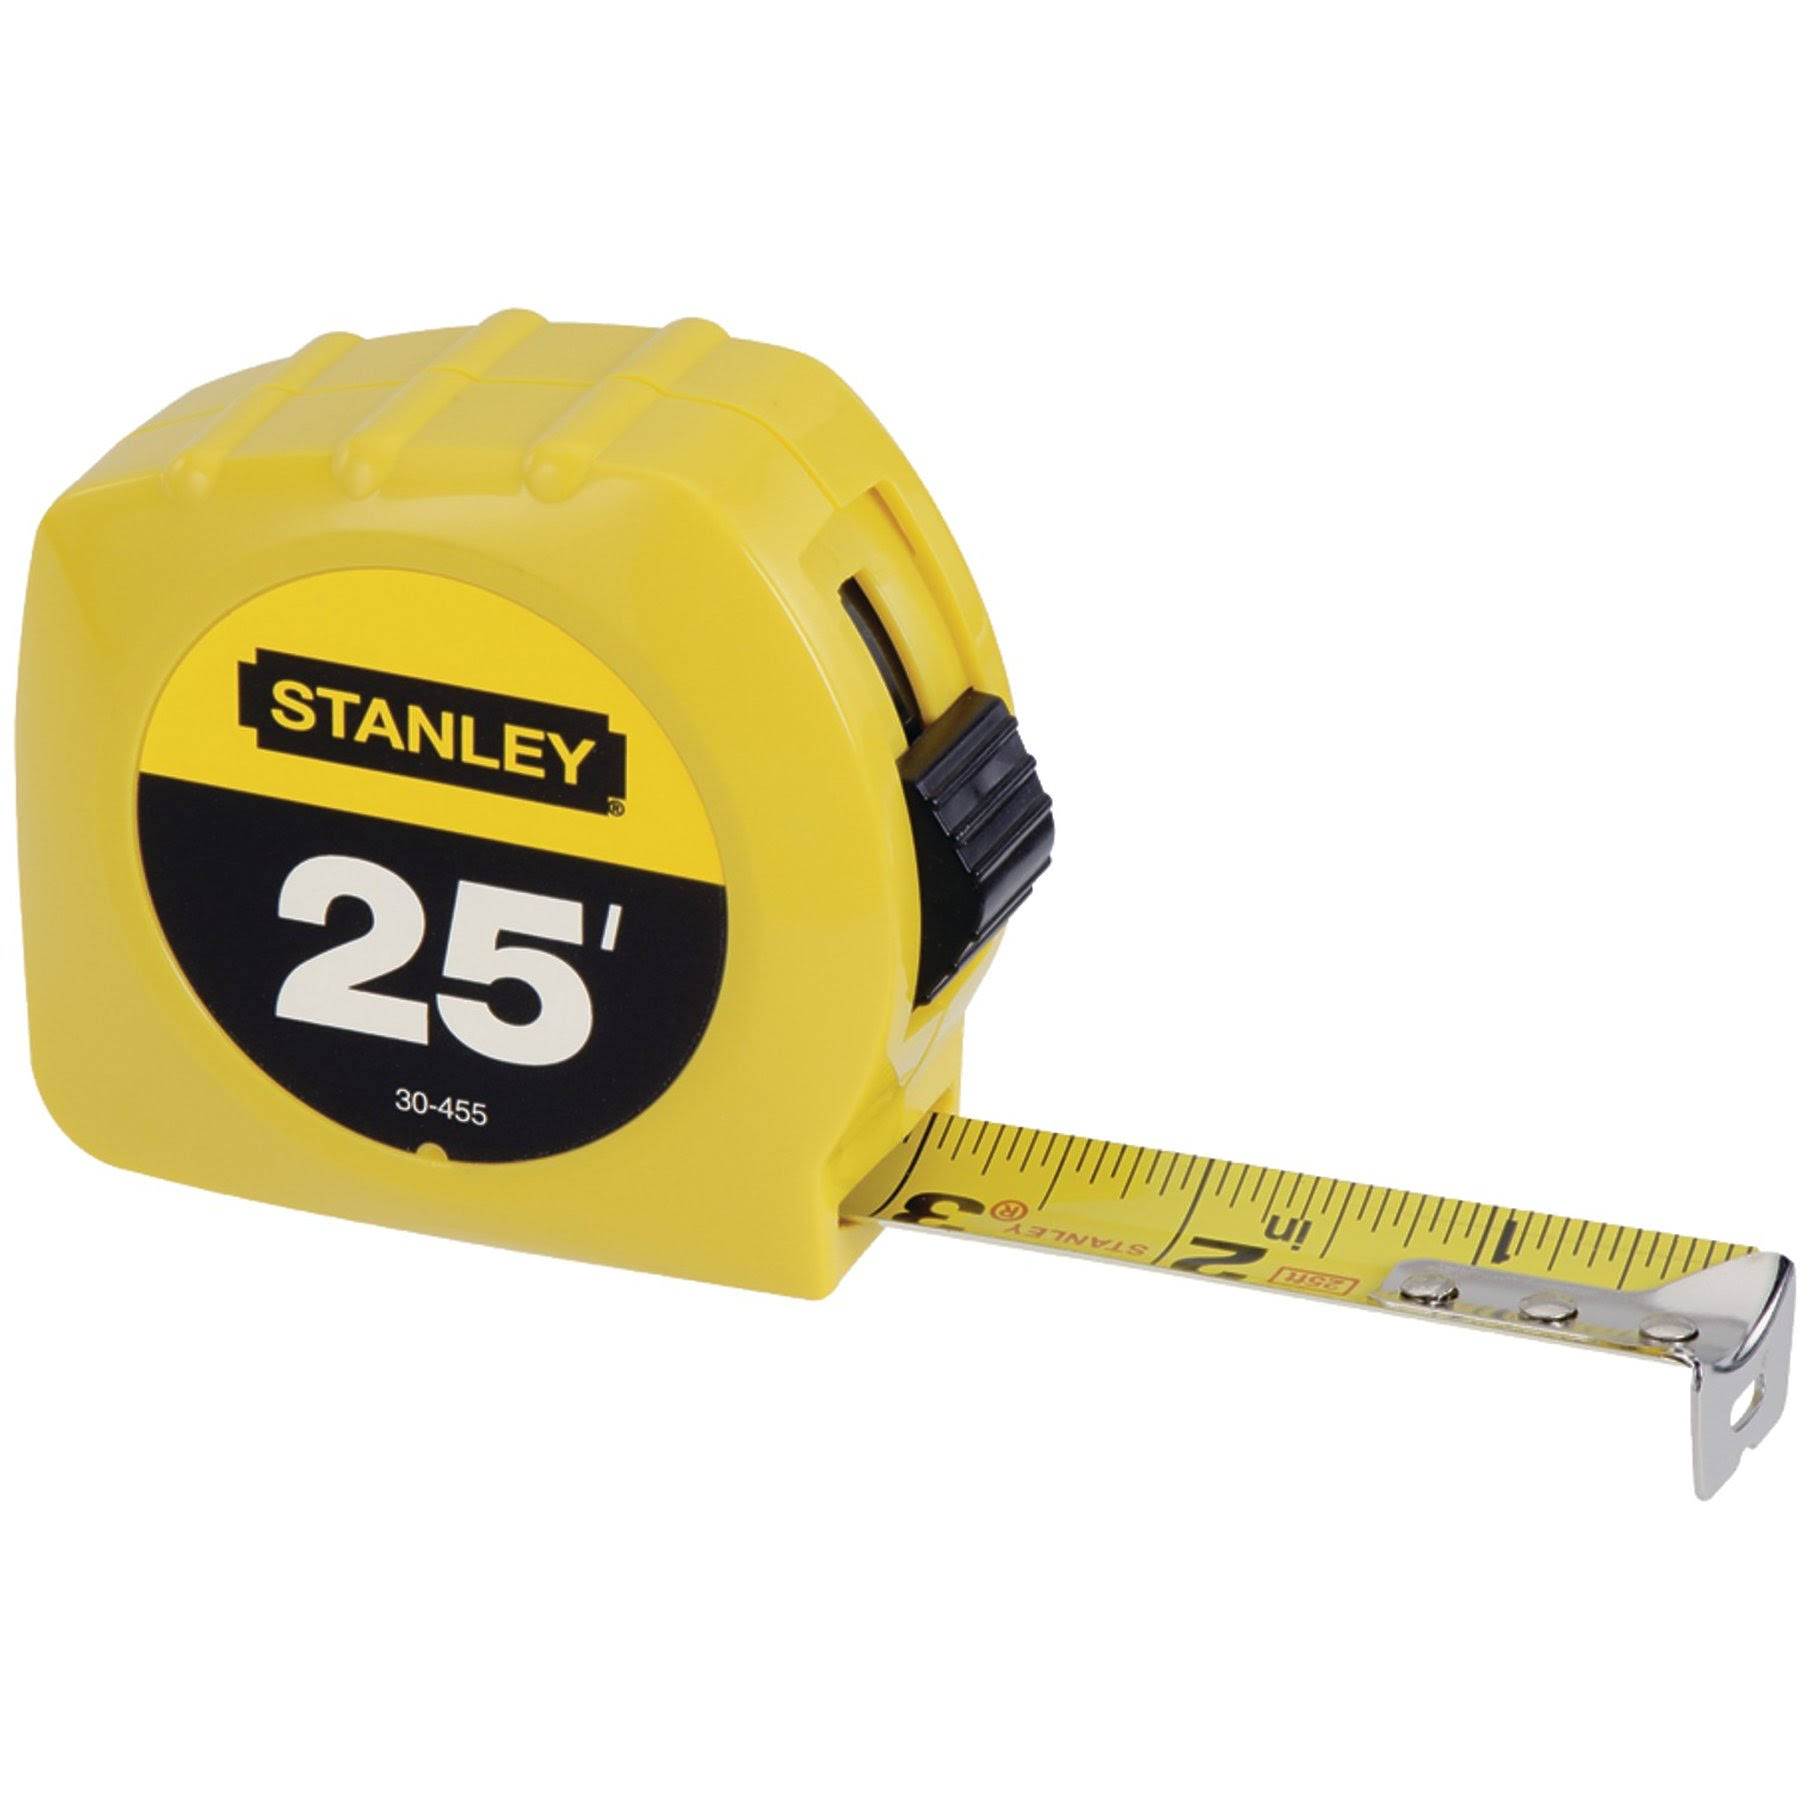 Stanley Tape Measure - Yellow